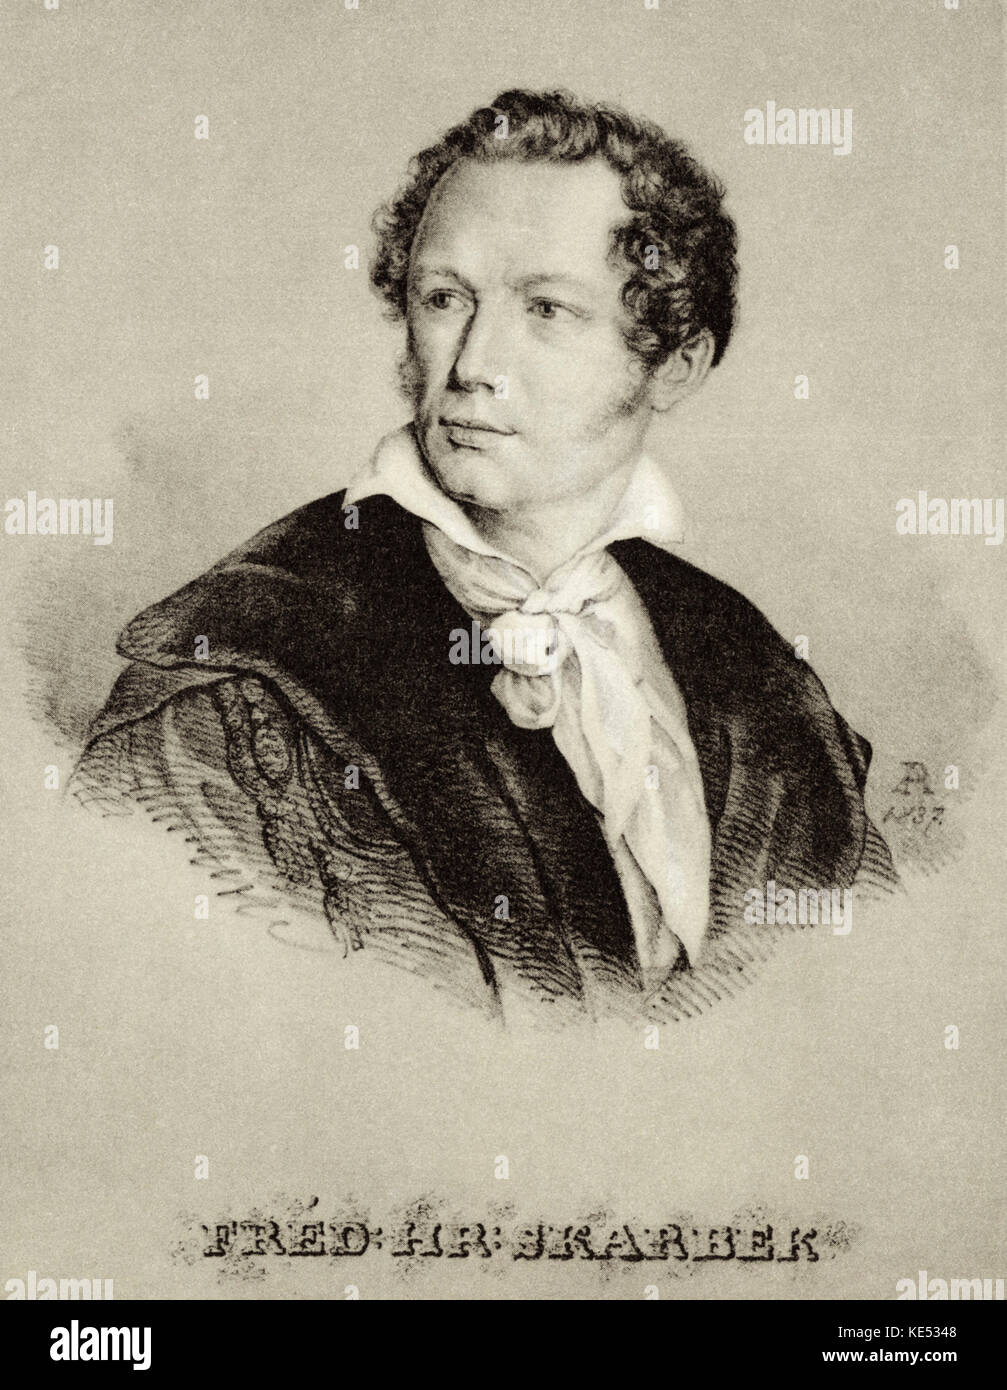 Fryderyck Florian Skarbek - Portrait von Fréderic Chopin's Pate. Durch Bulakowski, 1837 Lithographie. FFS: 1792 - 1866. Stockfoto